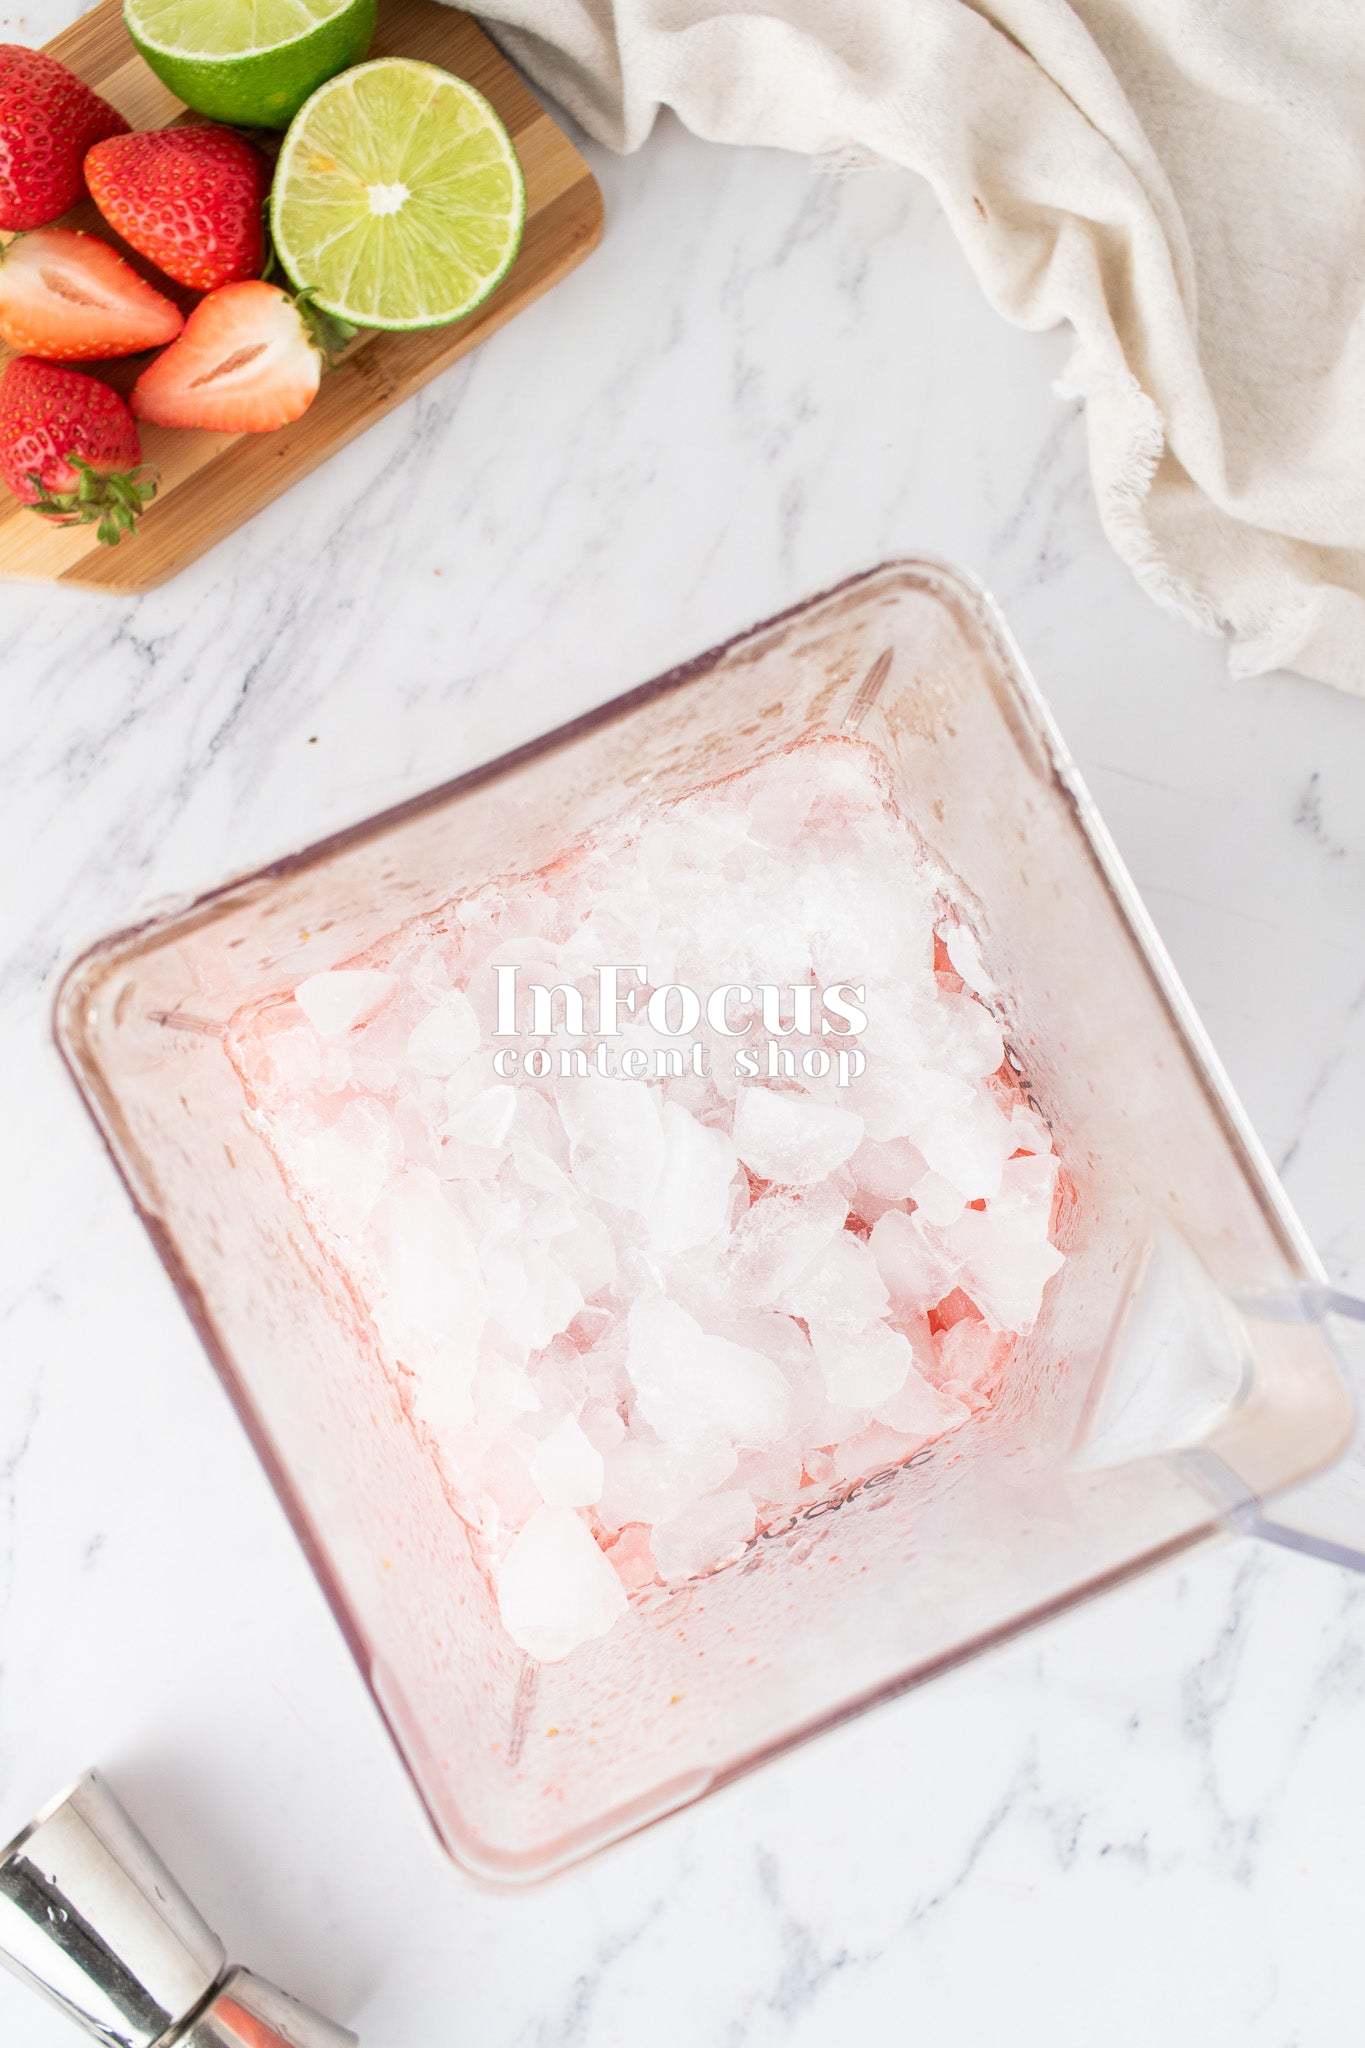 Strawberry Daiquiris- Exclusive